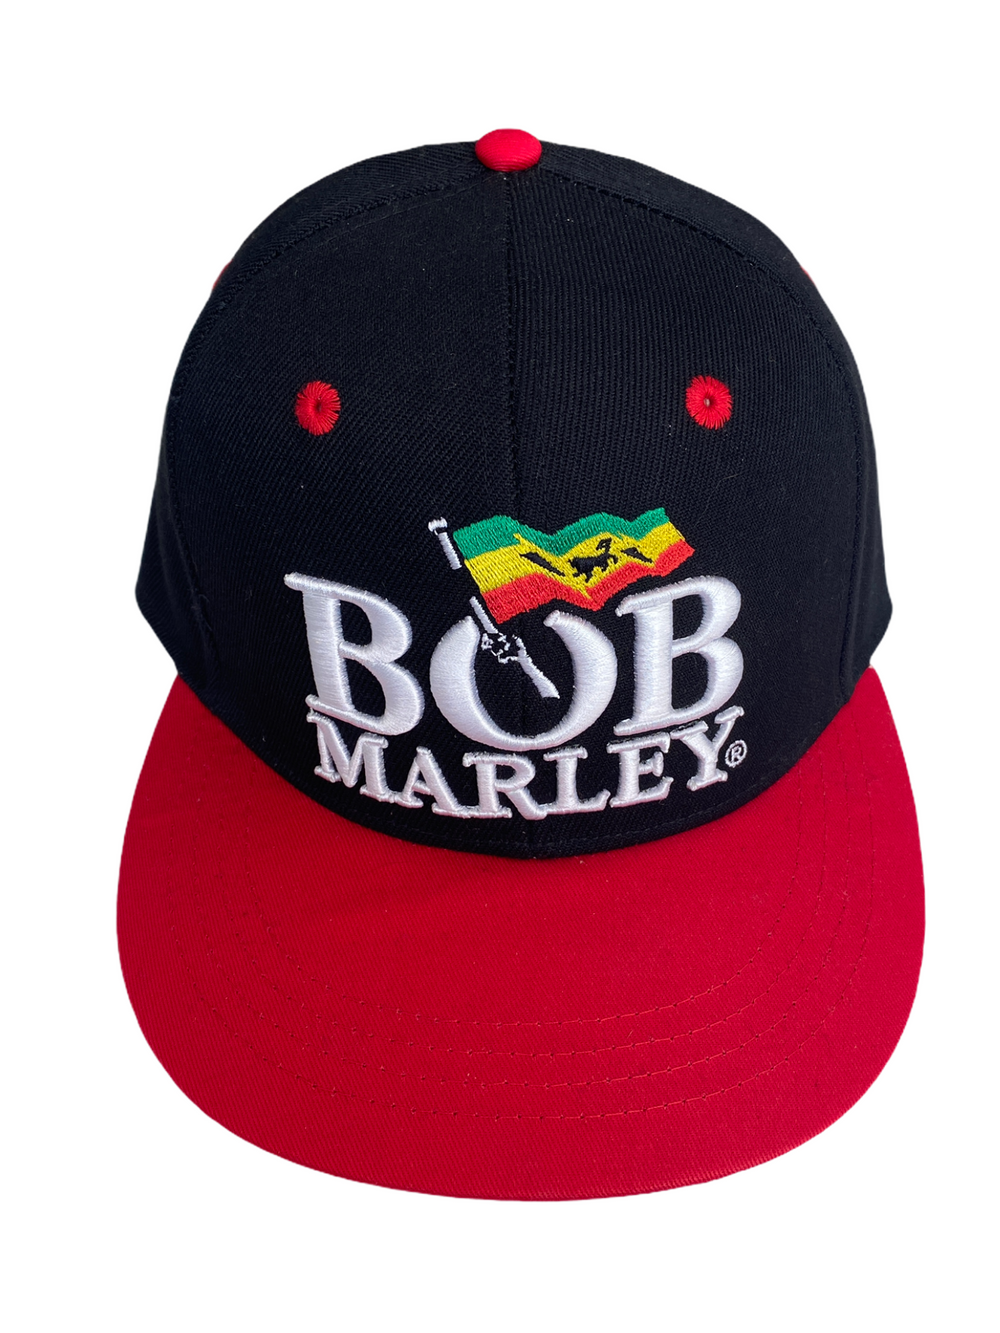 Bob Marley Official Flat Snapback Cap Adjustable Brand New Name Flag Logo